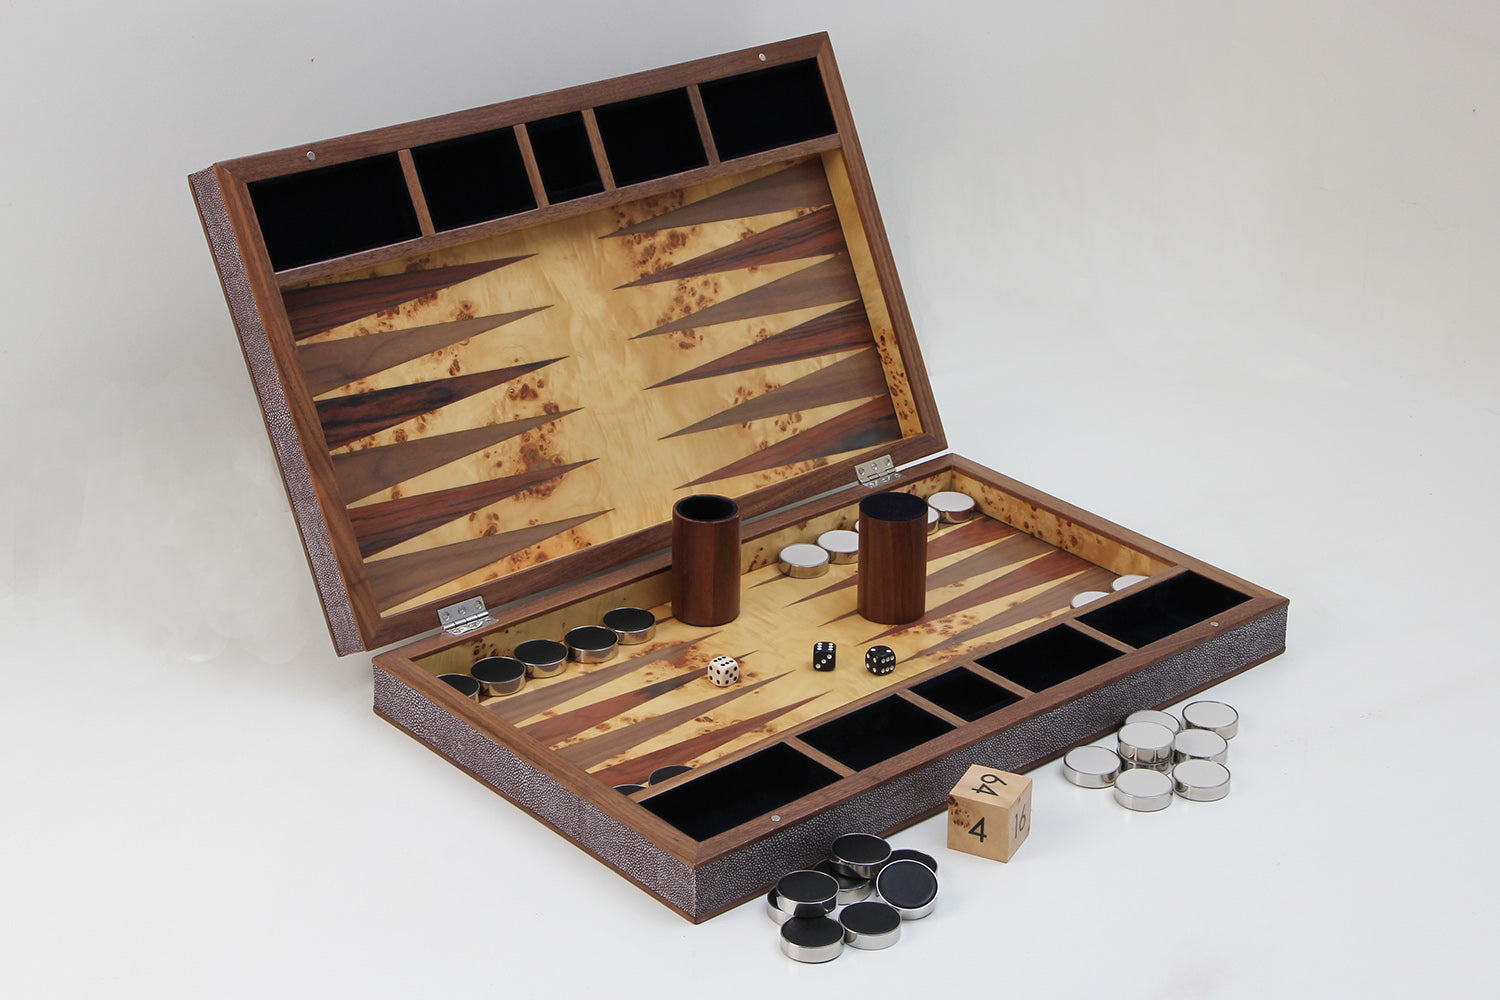  https://forwooddesign.com/app/uploads/2020/06/Unique-backgammon-board-Mulberry-shagreen.jpg